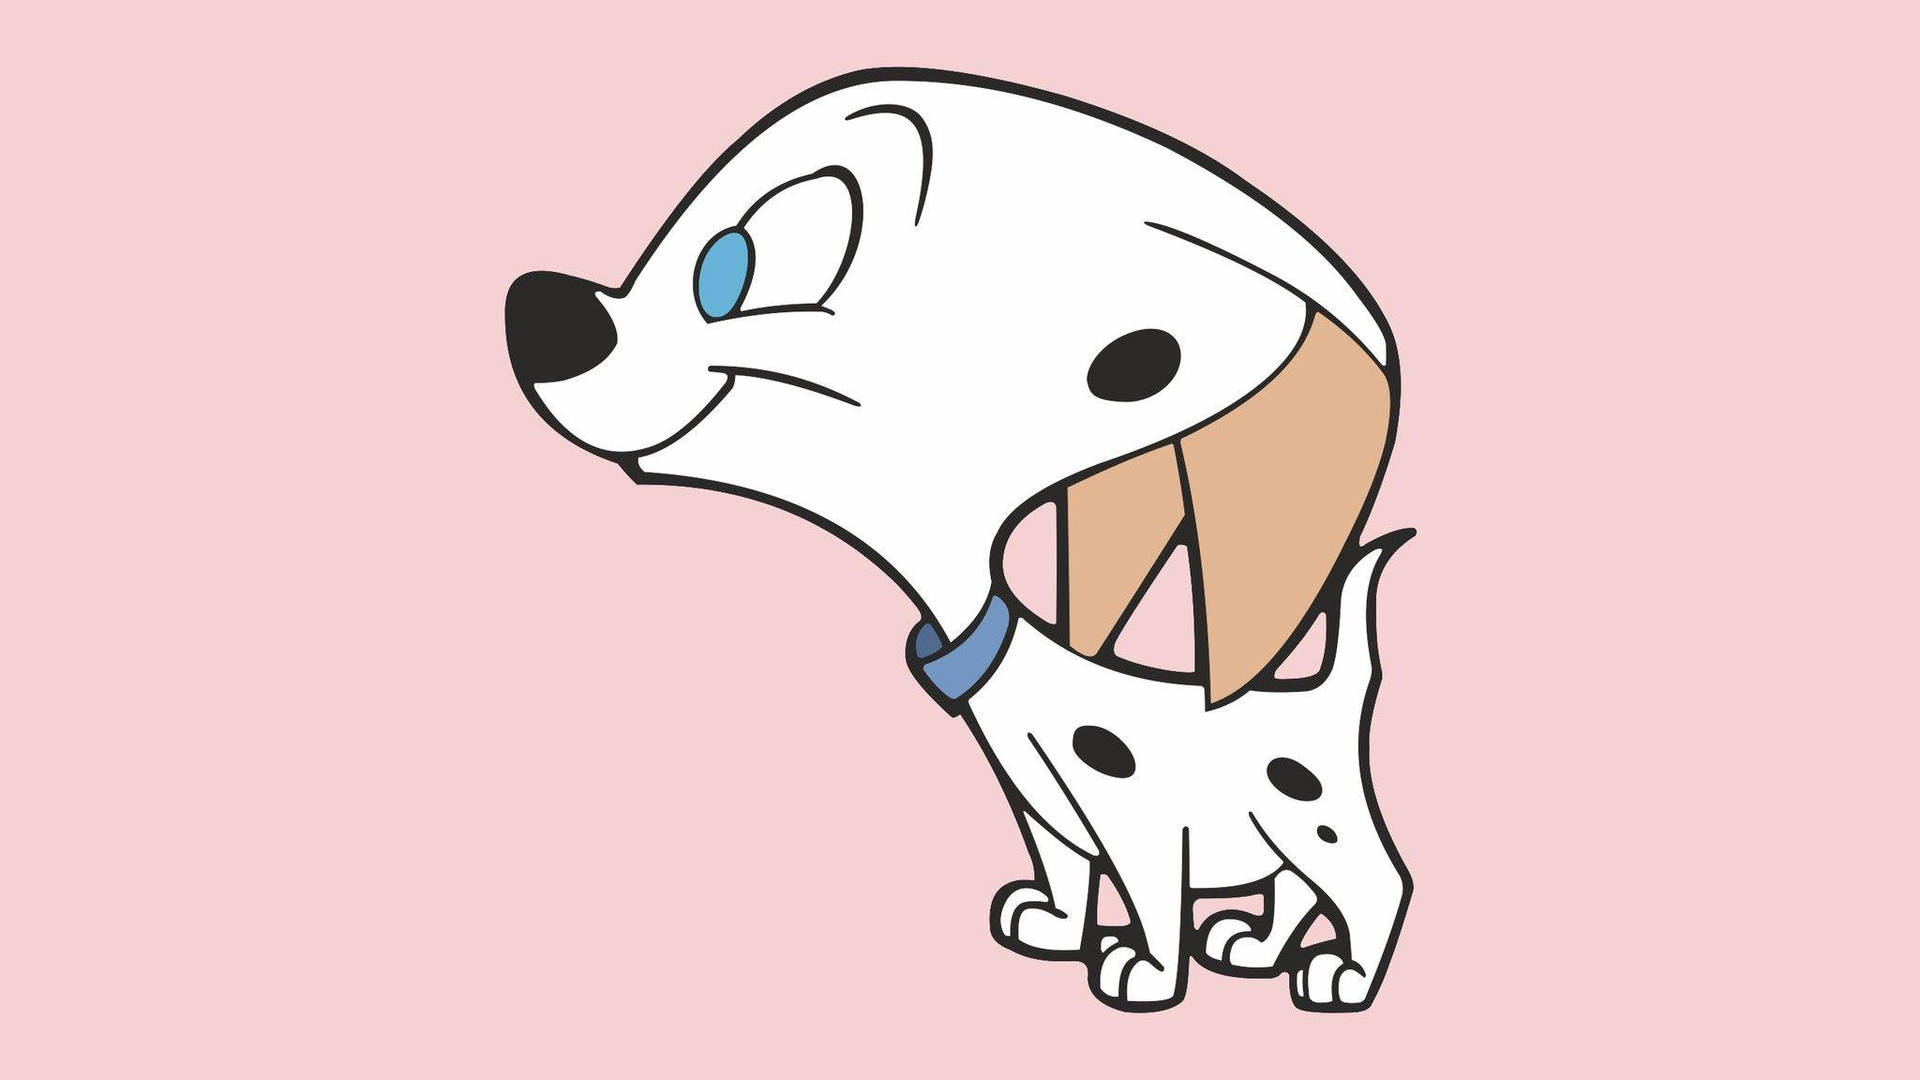 Free Cartoon Dog Wallpaper Downloads, [100+] Cartoon Dog Wallpapers for  FREE 